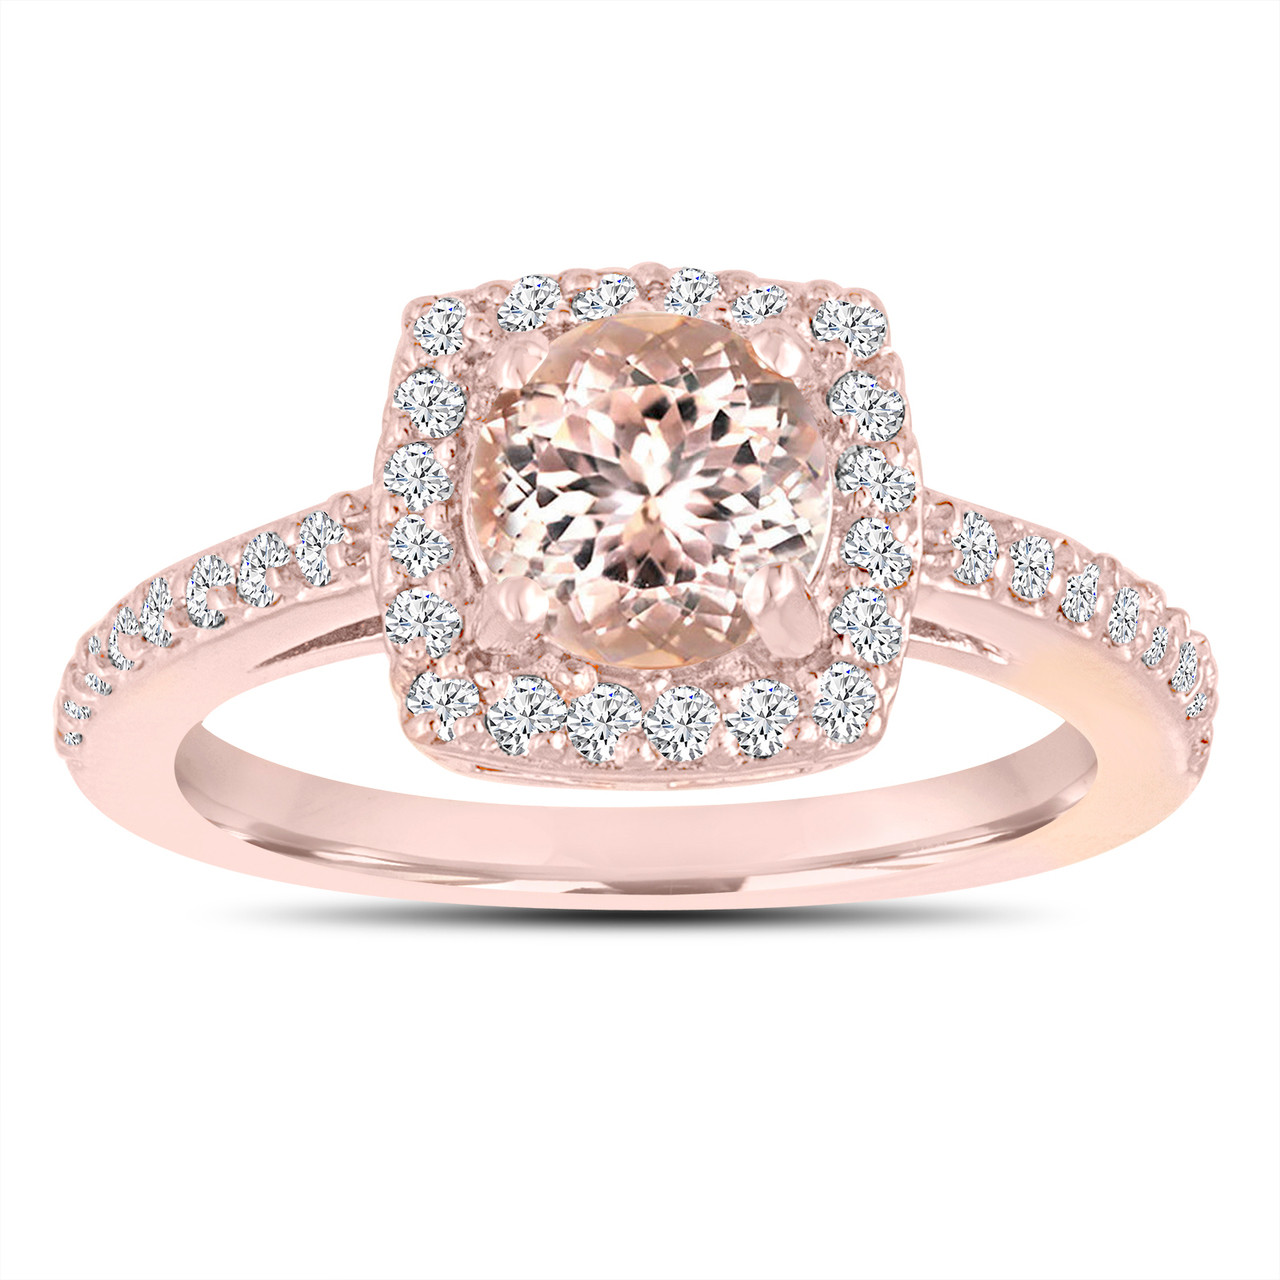 Pink Peach Morganite Engagement Ring 14K Rose Gold 1.28 Carat Certified